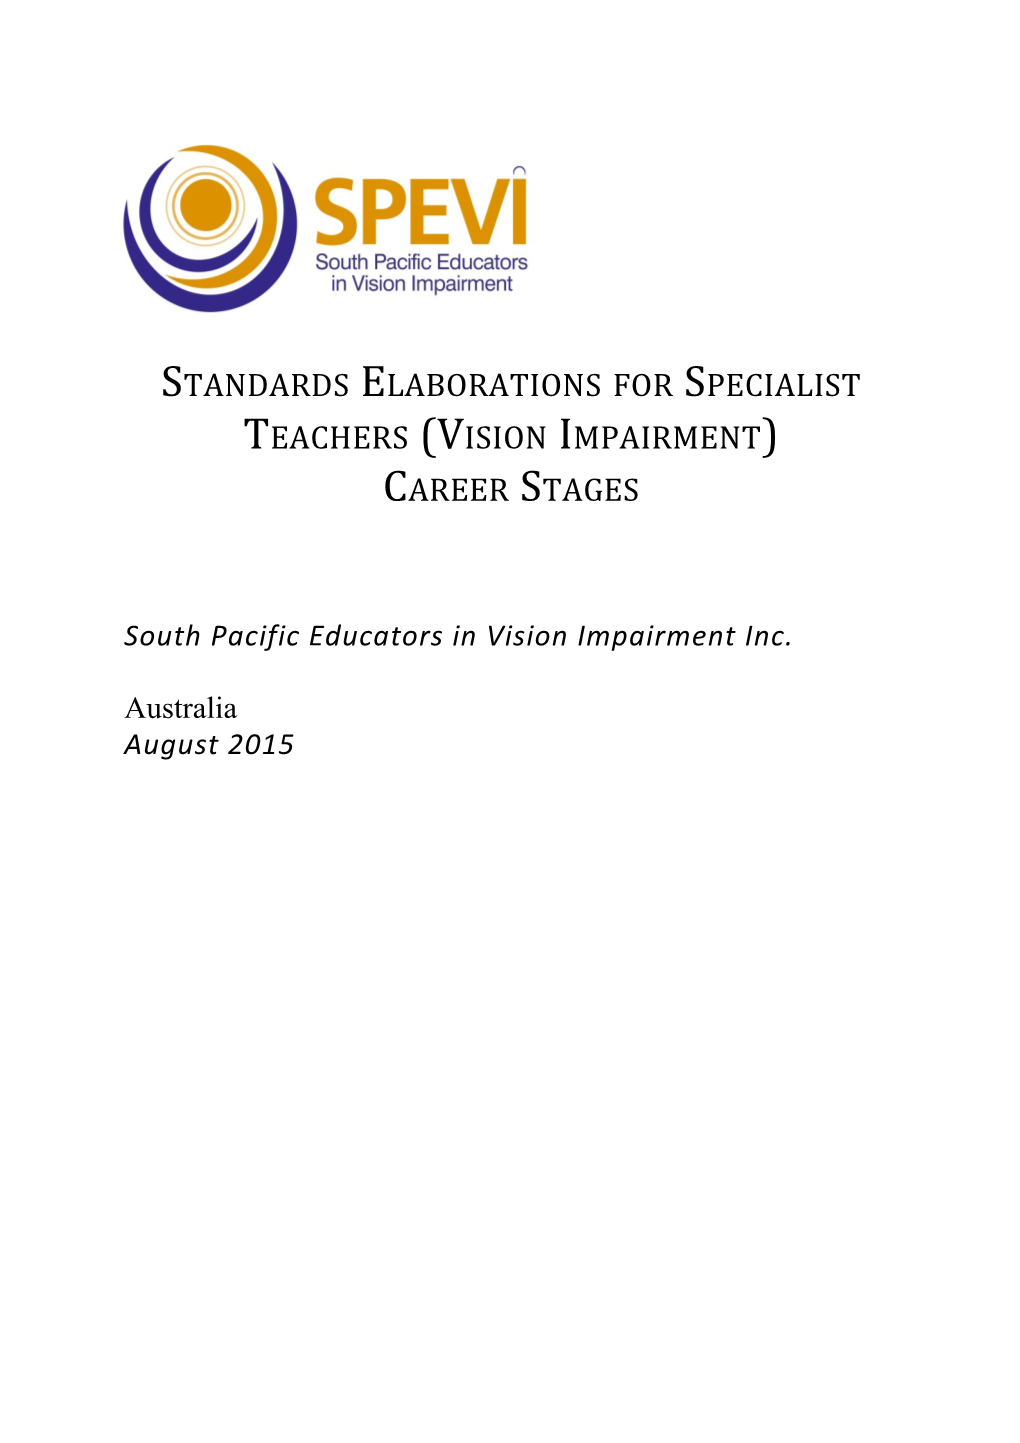 Standards Elaborations for Specialist Teachers (Vision Impairment)